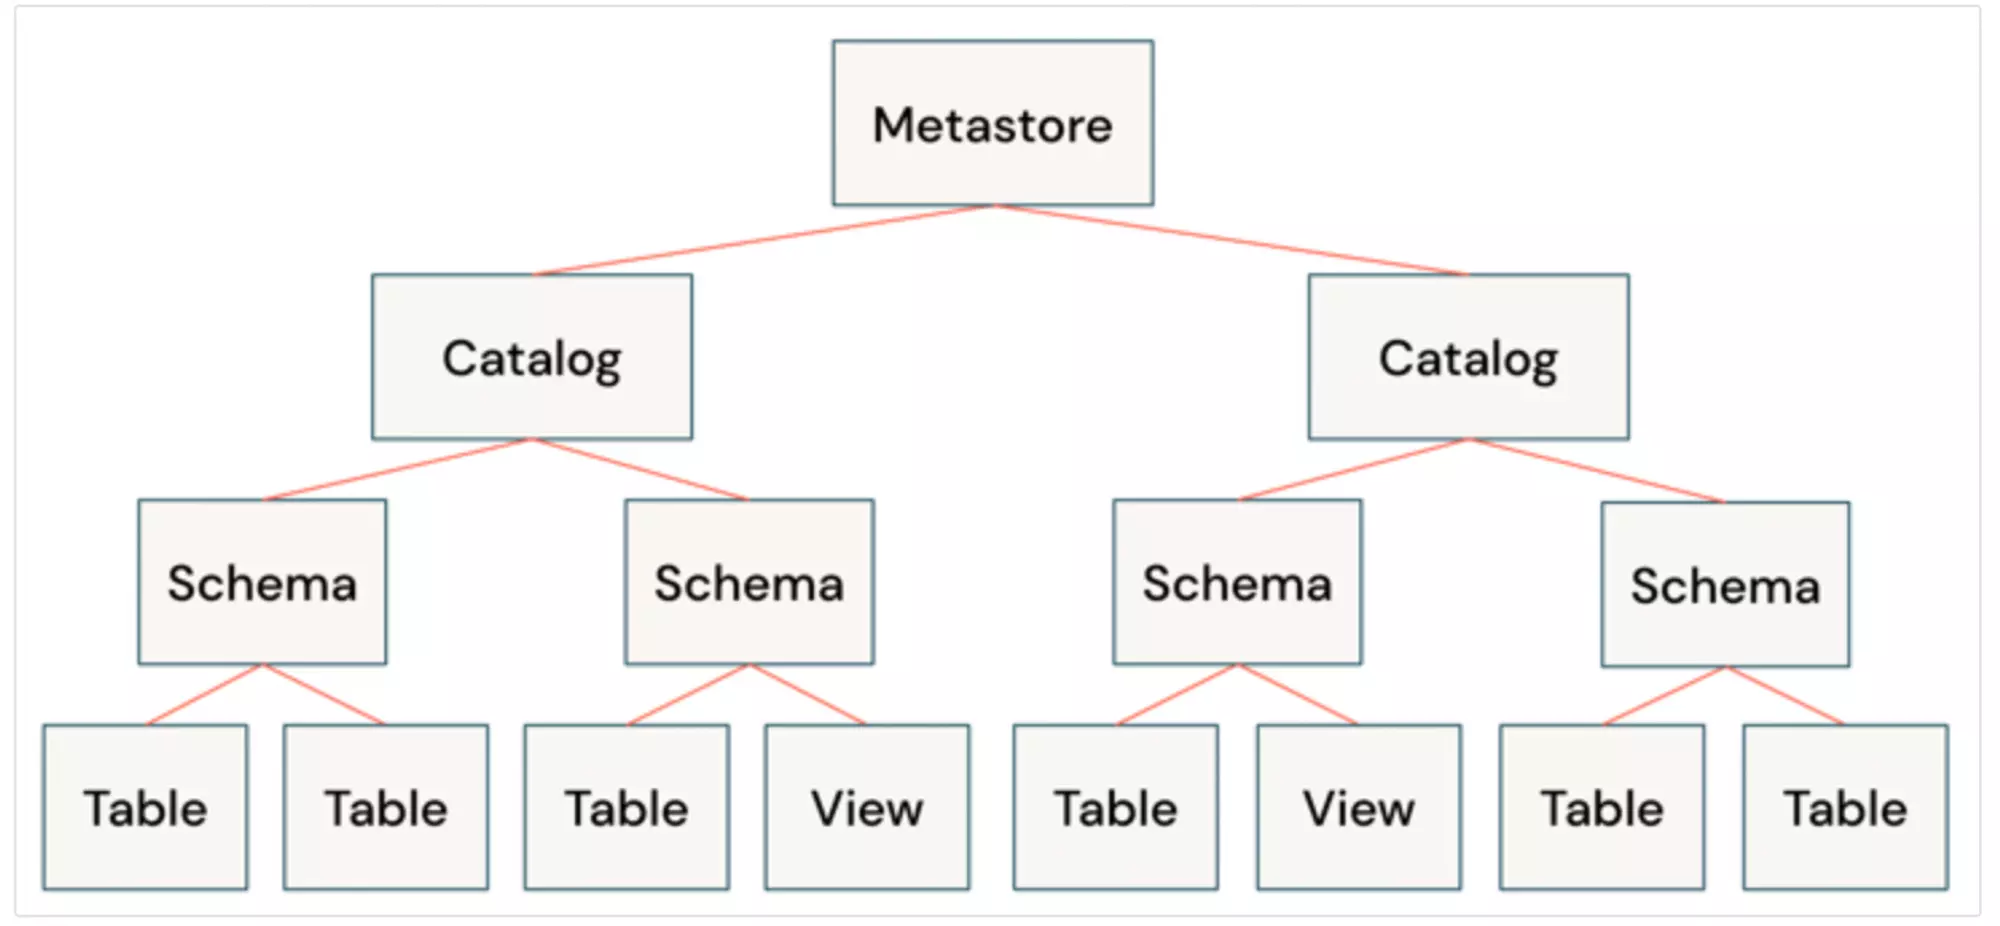 Metastore three-level namespace depiction. Image from Databricks documentation